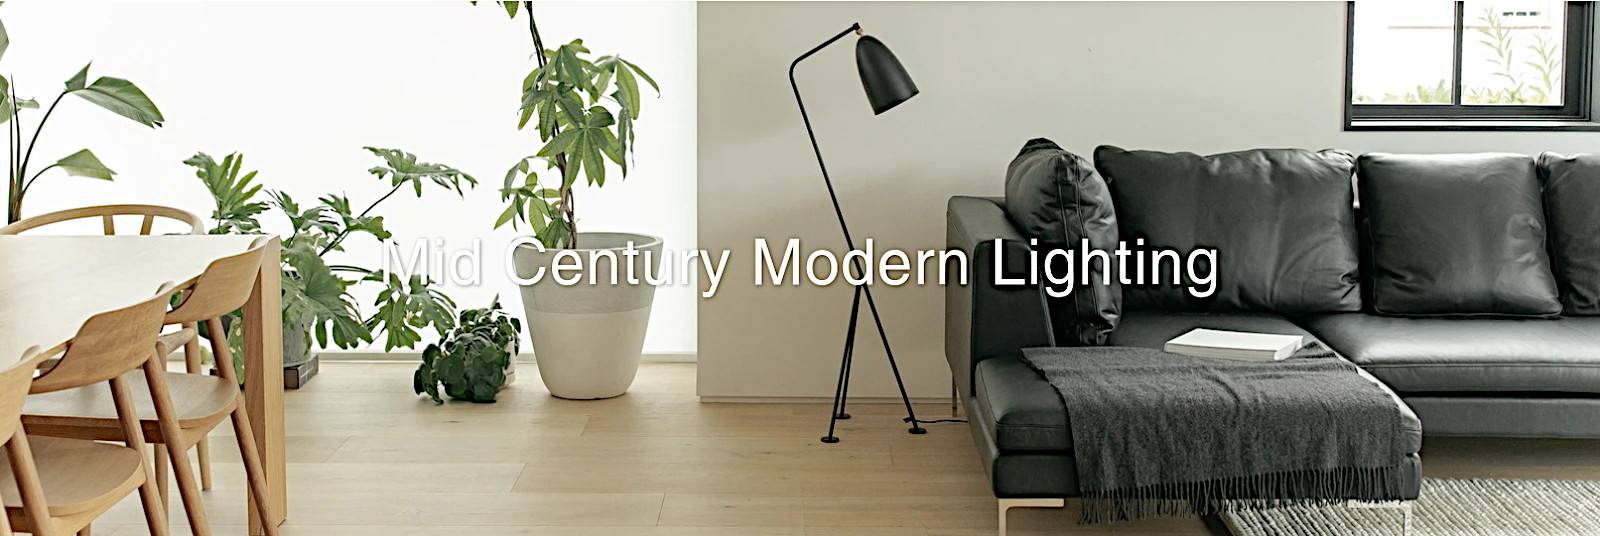 mid century modern lighting cost-effective